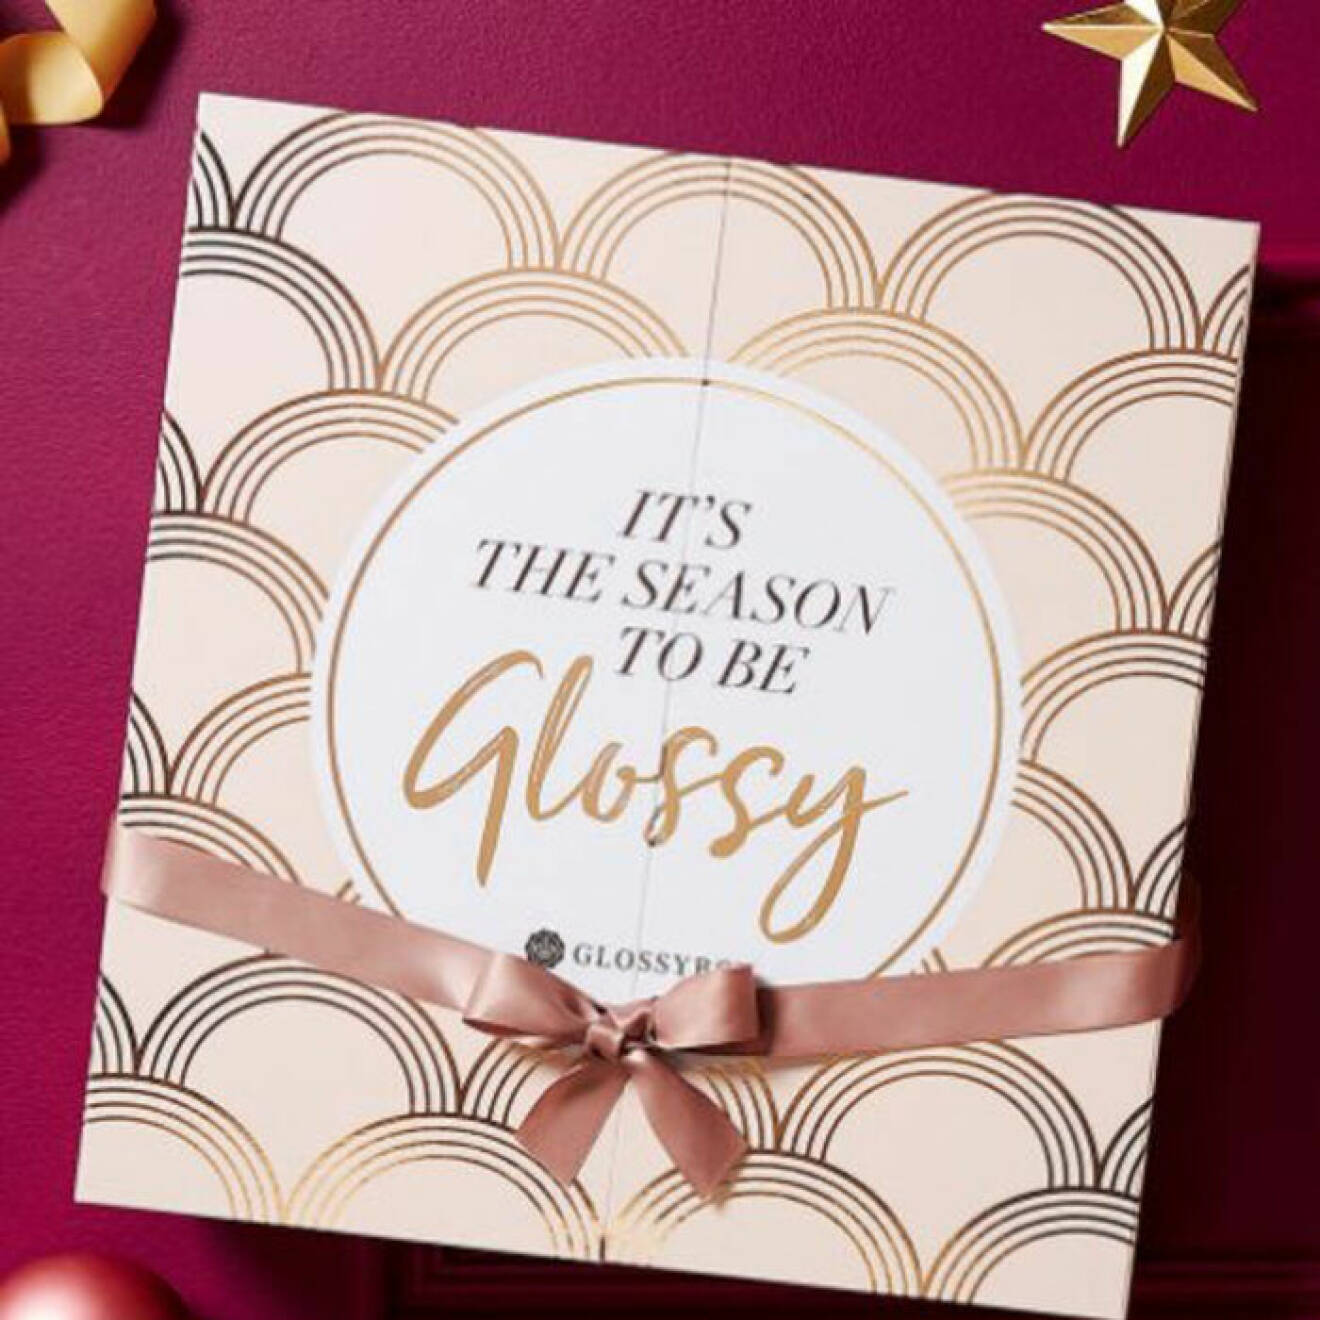 Glossybox adventskalender 2019